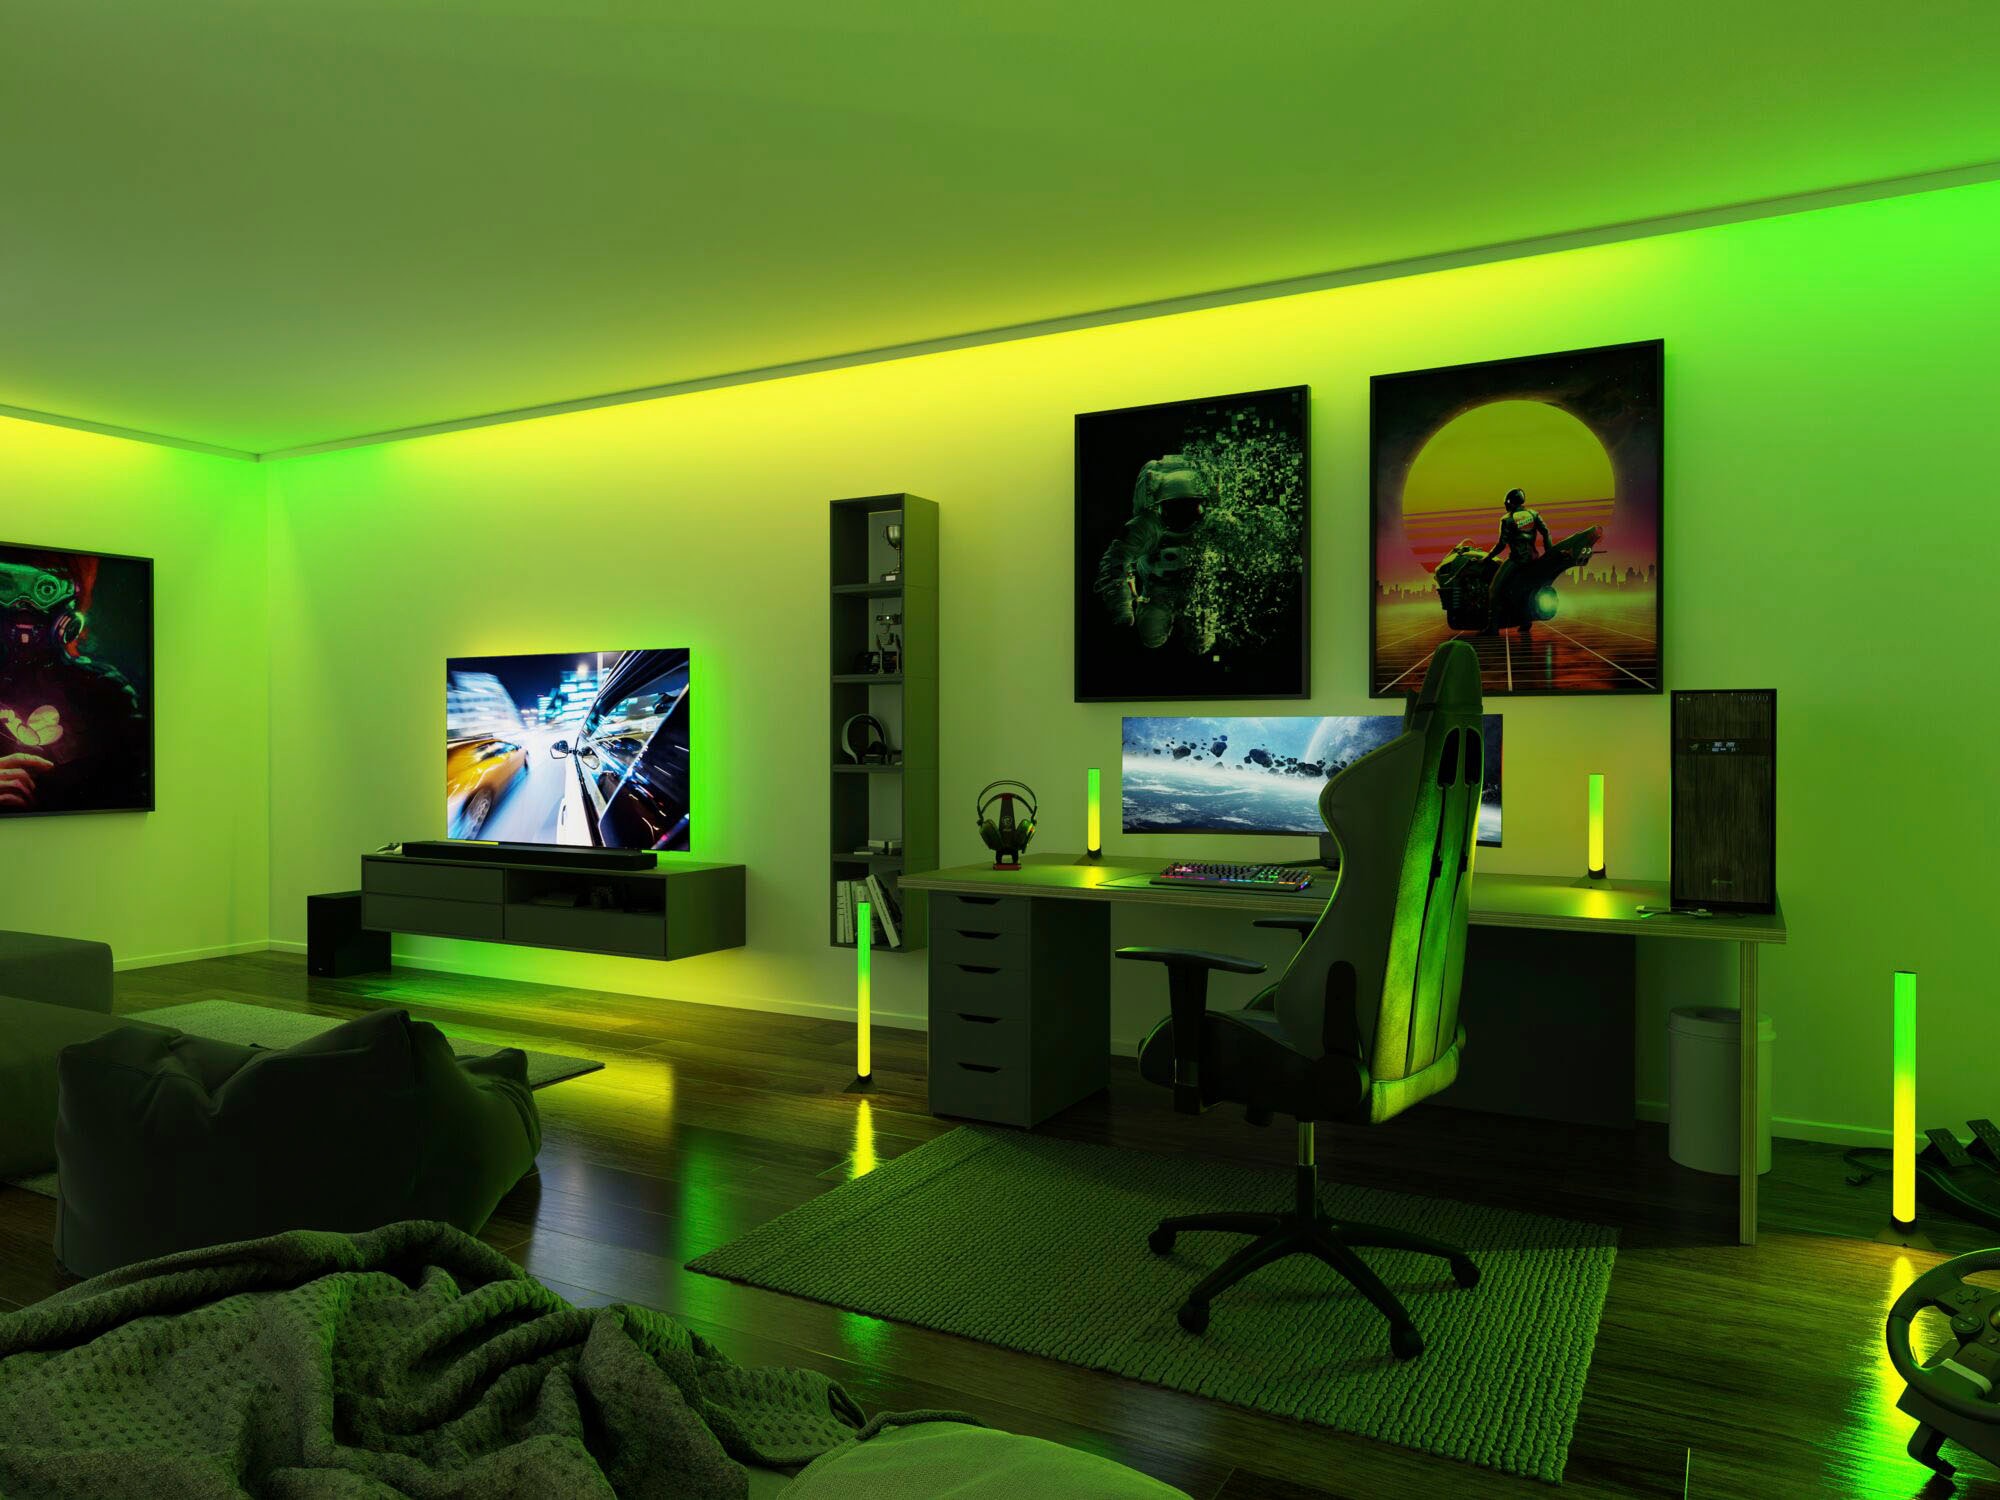 Paulmann LED-Streifen »USB LED Strip TV-Beleuchtung 65 Zoll 2,4m Dynamic Rainbow RGB 4W«, 1 St.-flammig